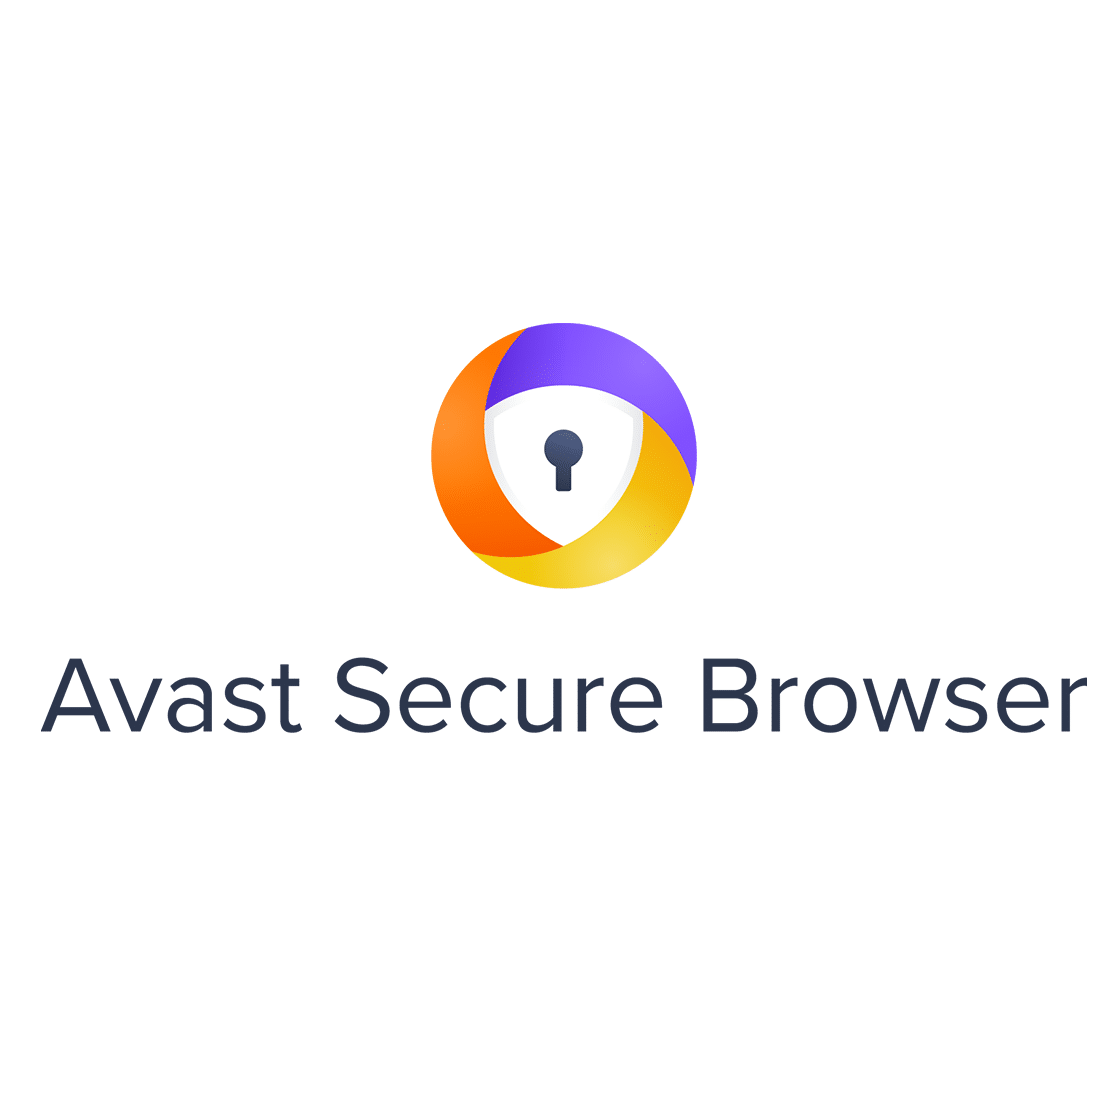 تحميل متصفح افاست للماك 2023 Avast Secure Browser For Mac